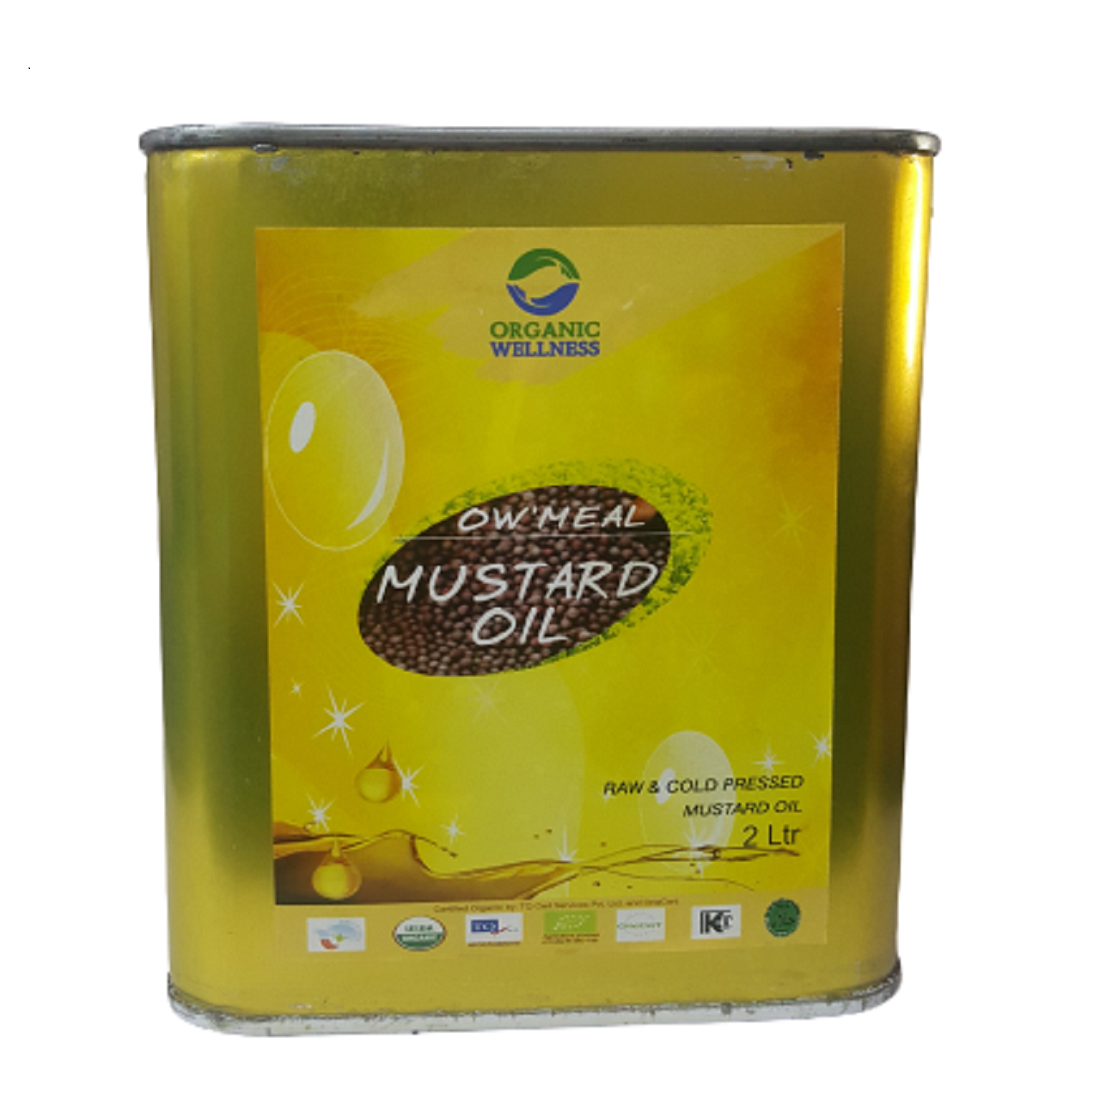 Organic Wellness Ow'meal Mustard Oil